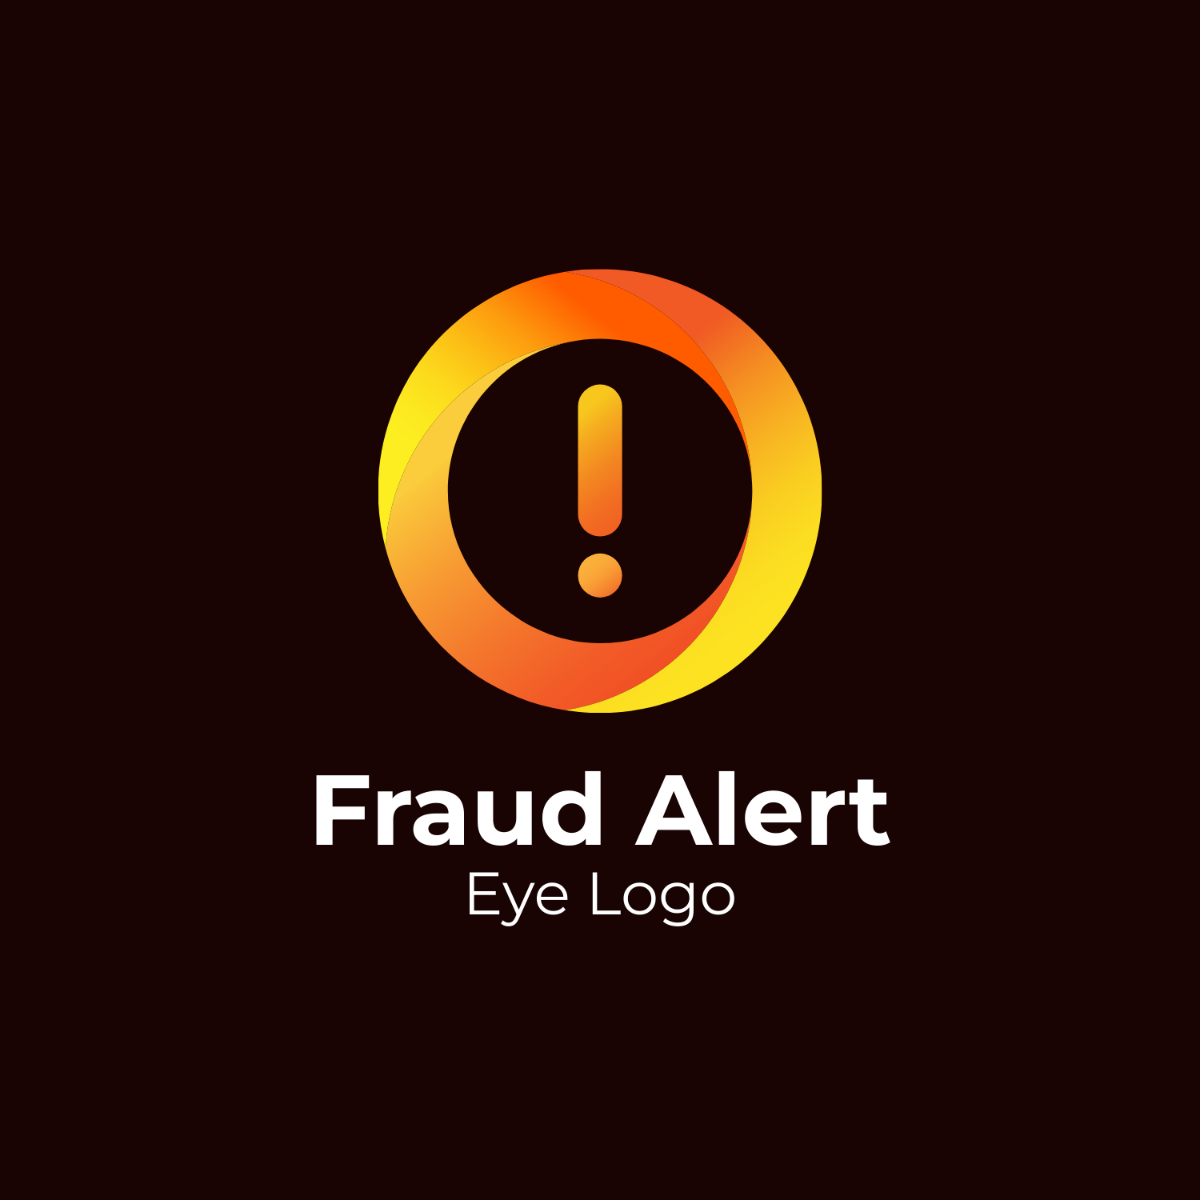 Fraud Alert Eye Logo Template